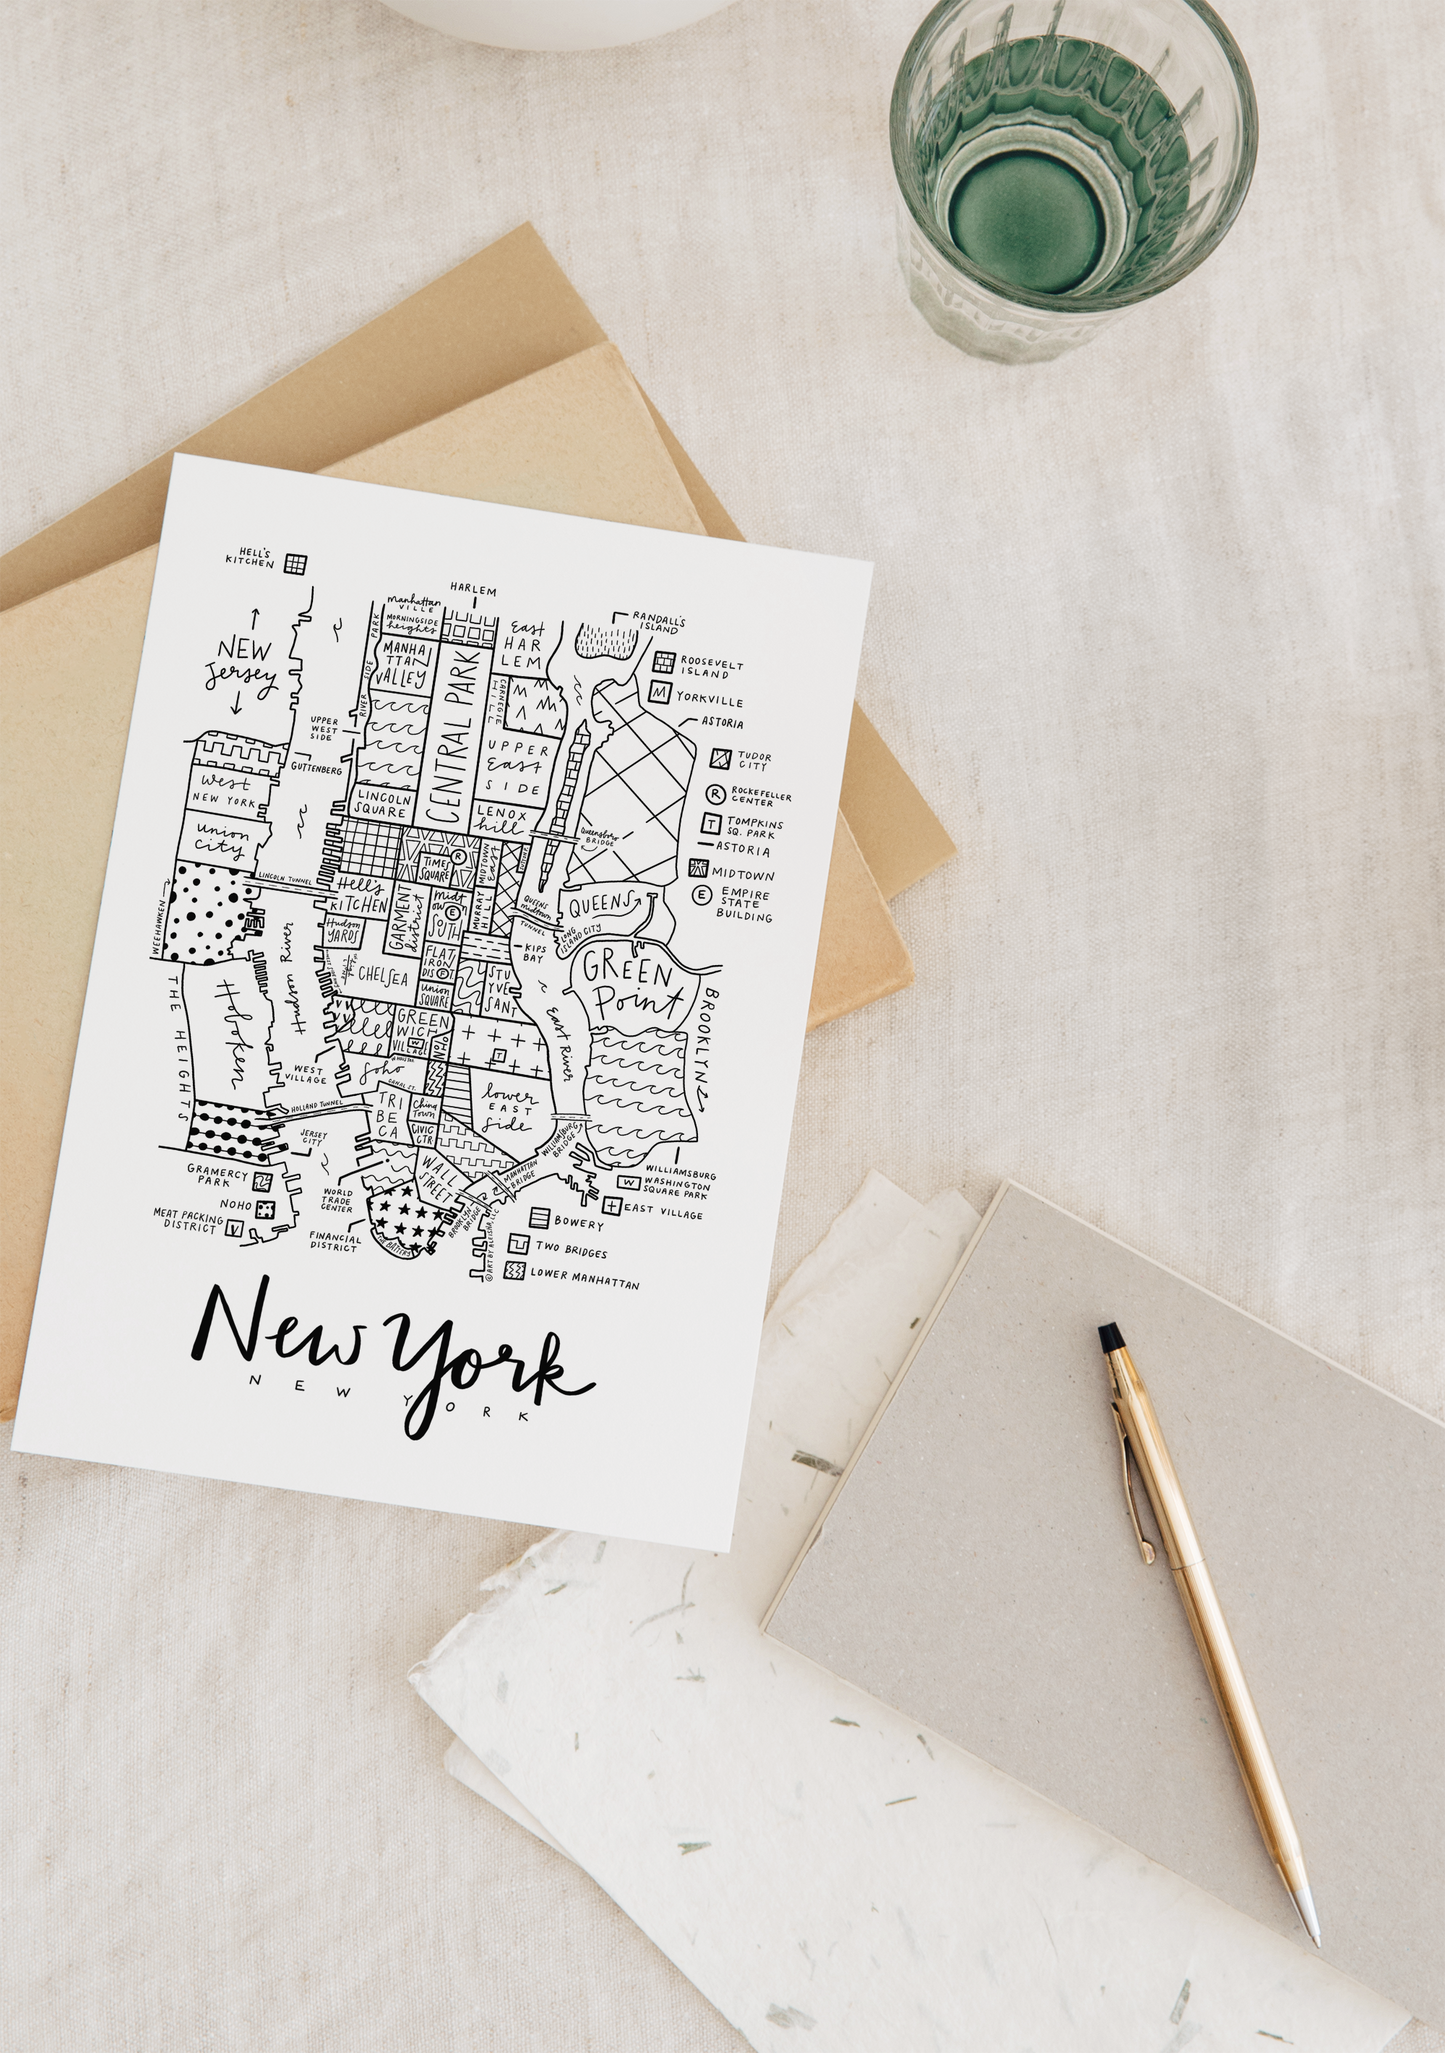 New York City Neighborhood Map Print